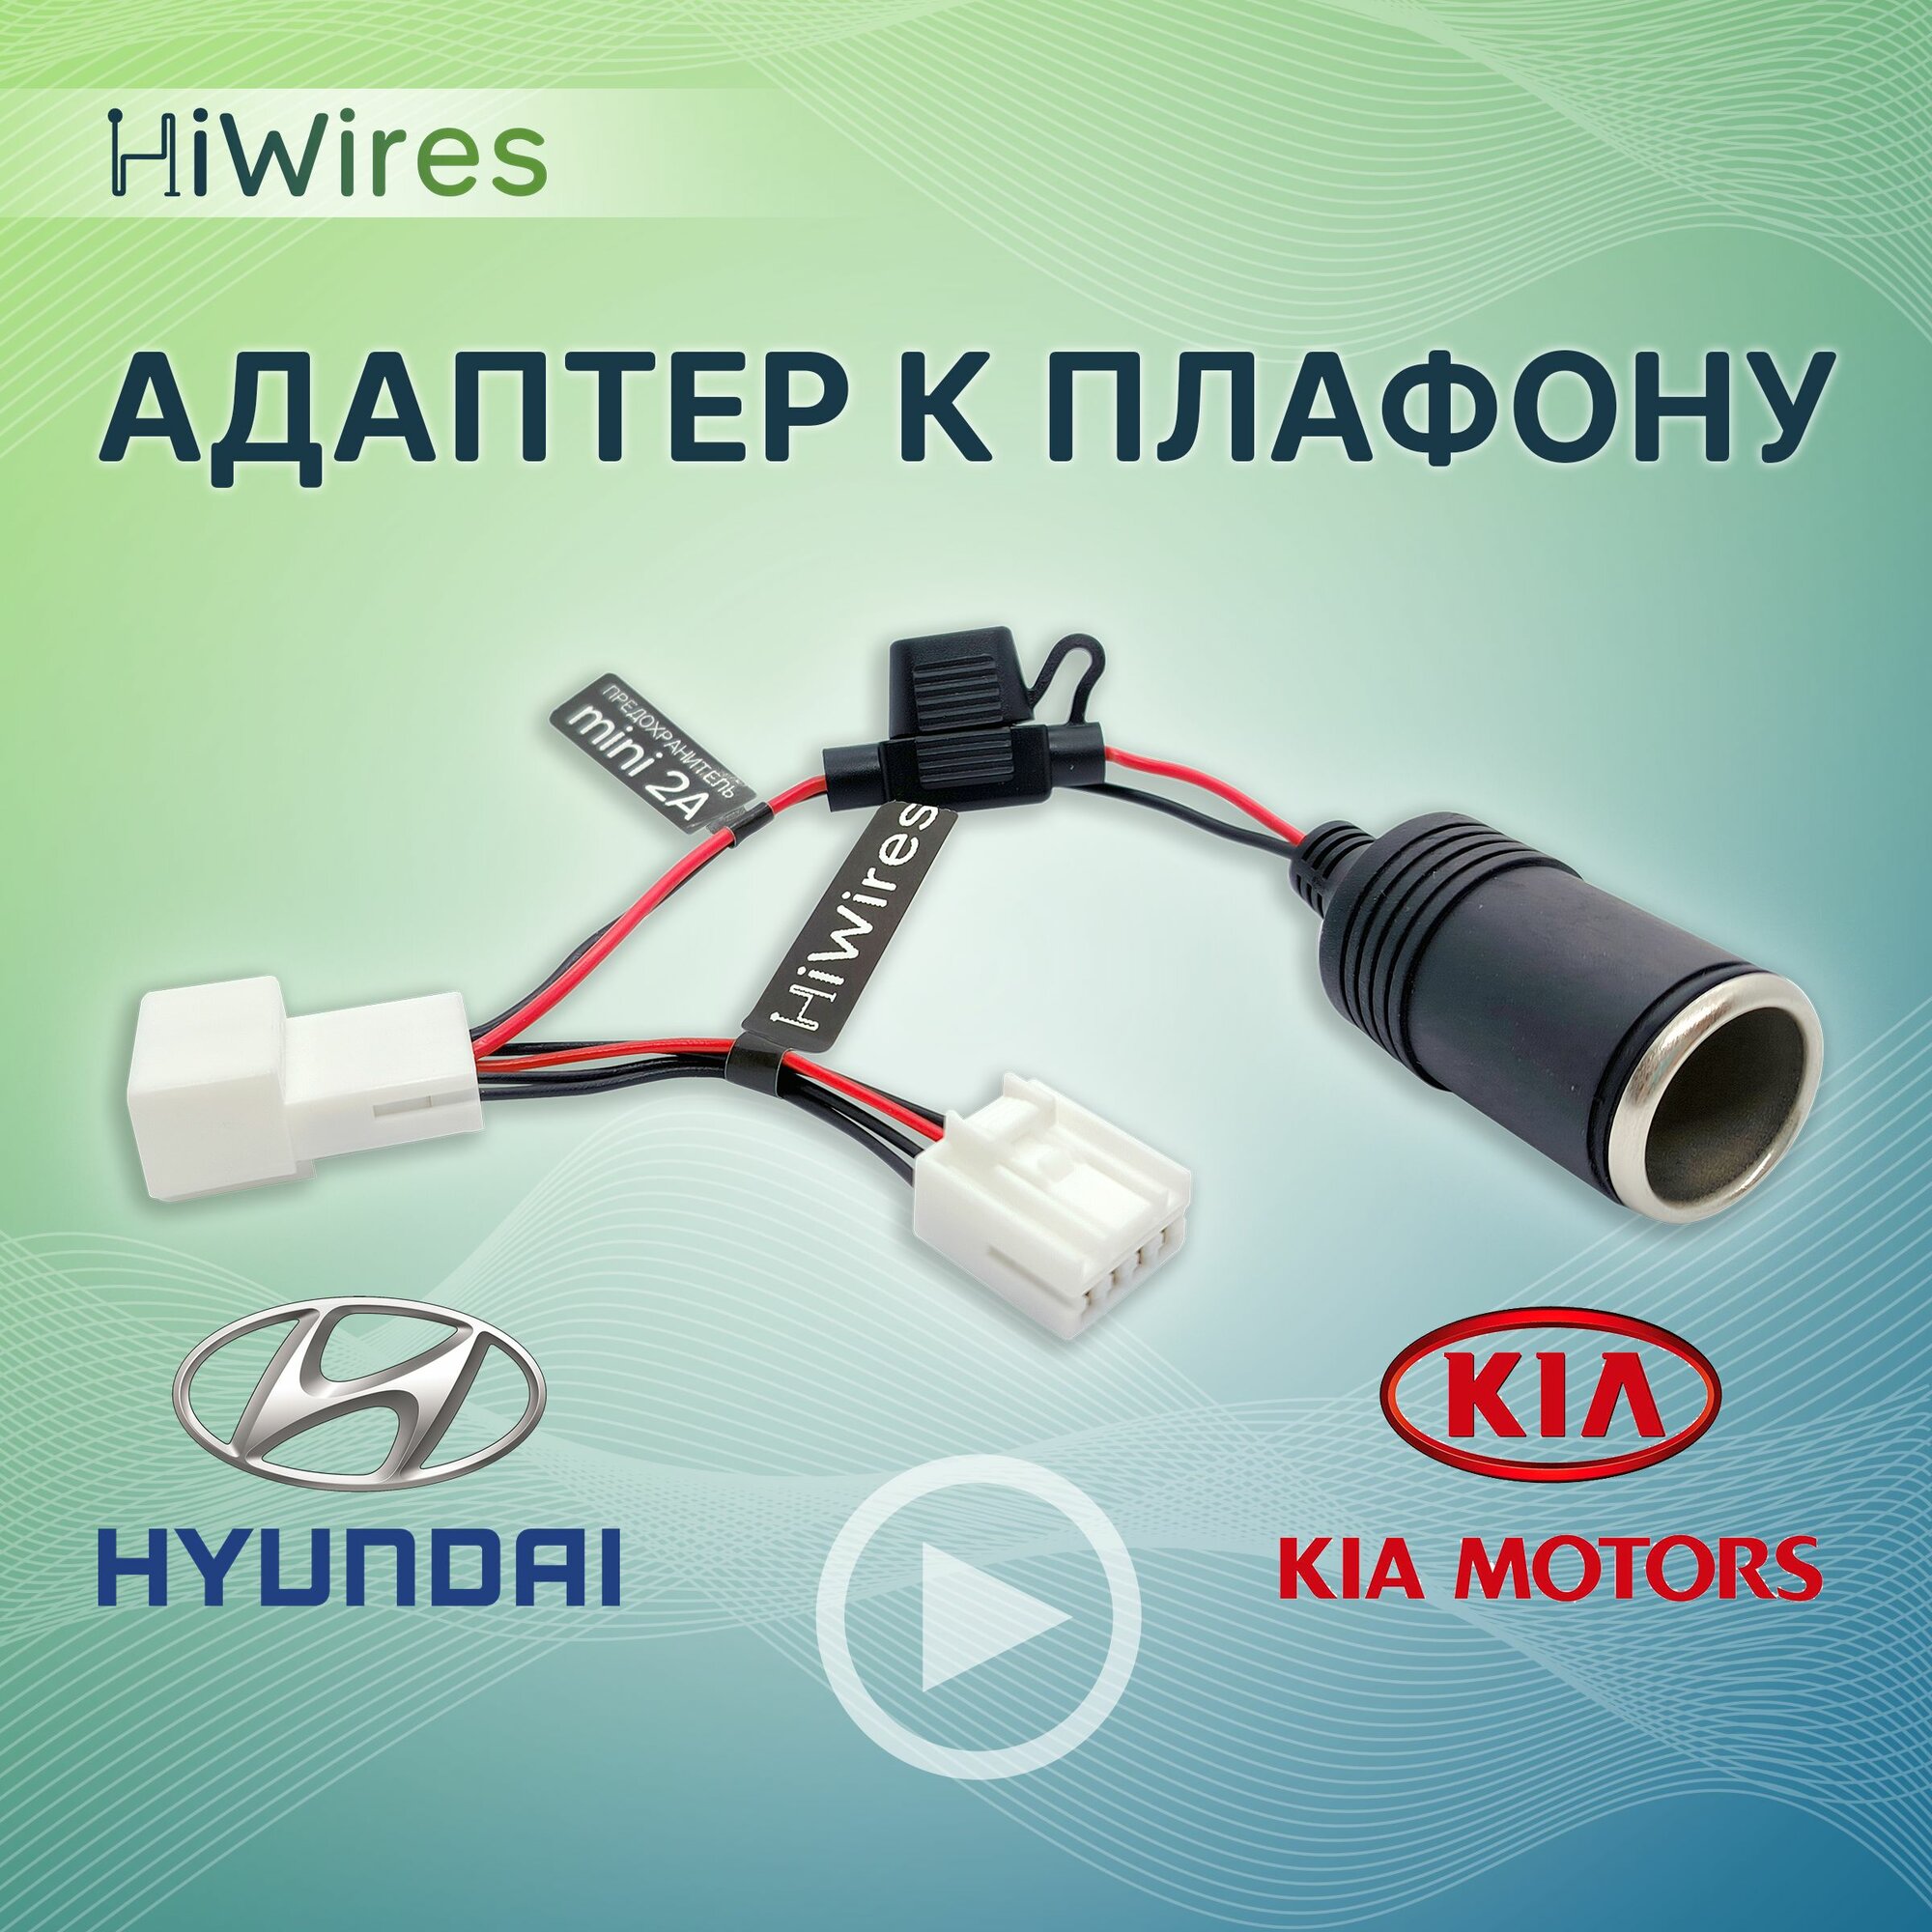 Адаптер к плафону с розеткой прикуривателя Kia Hyundai